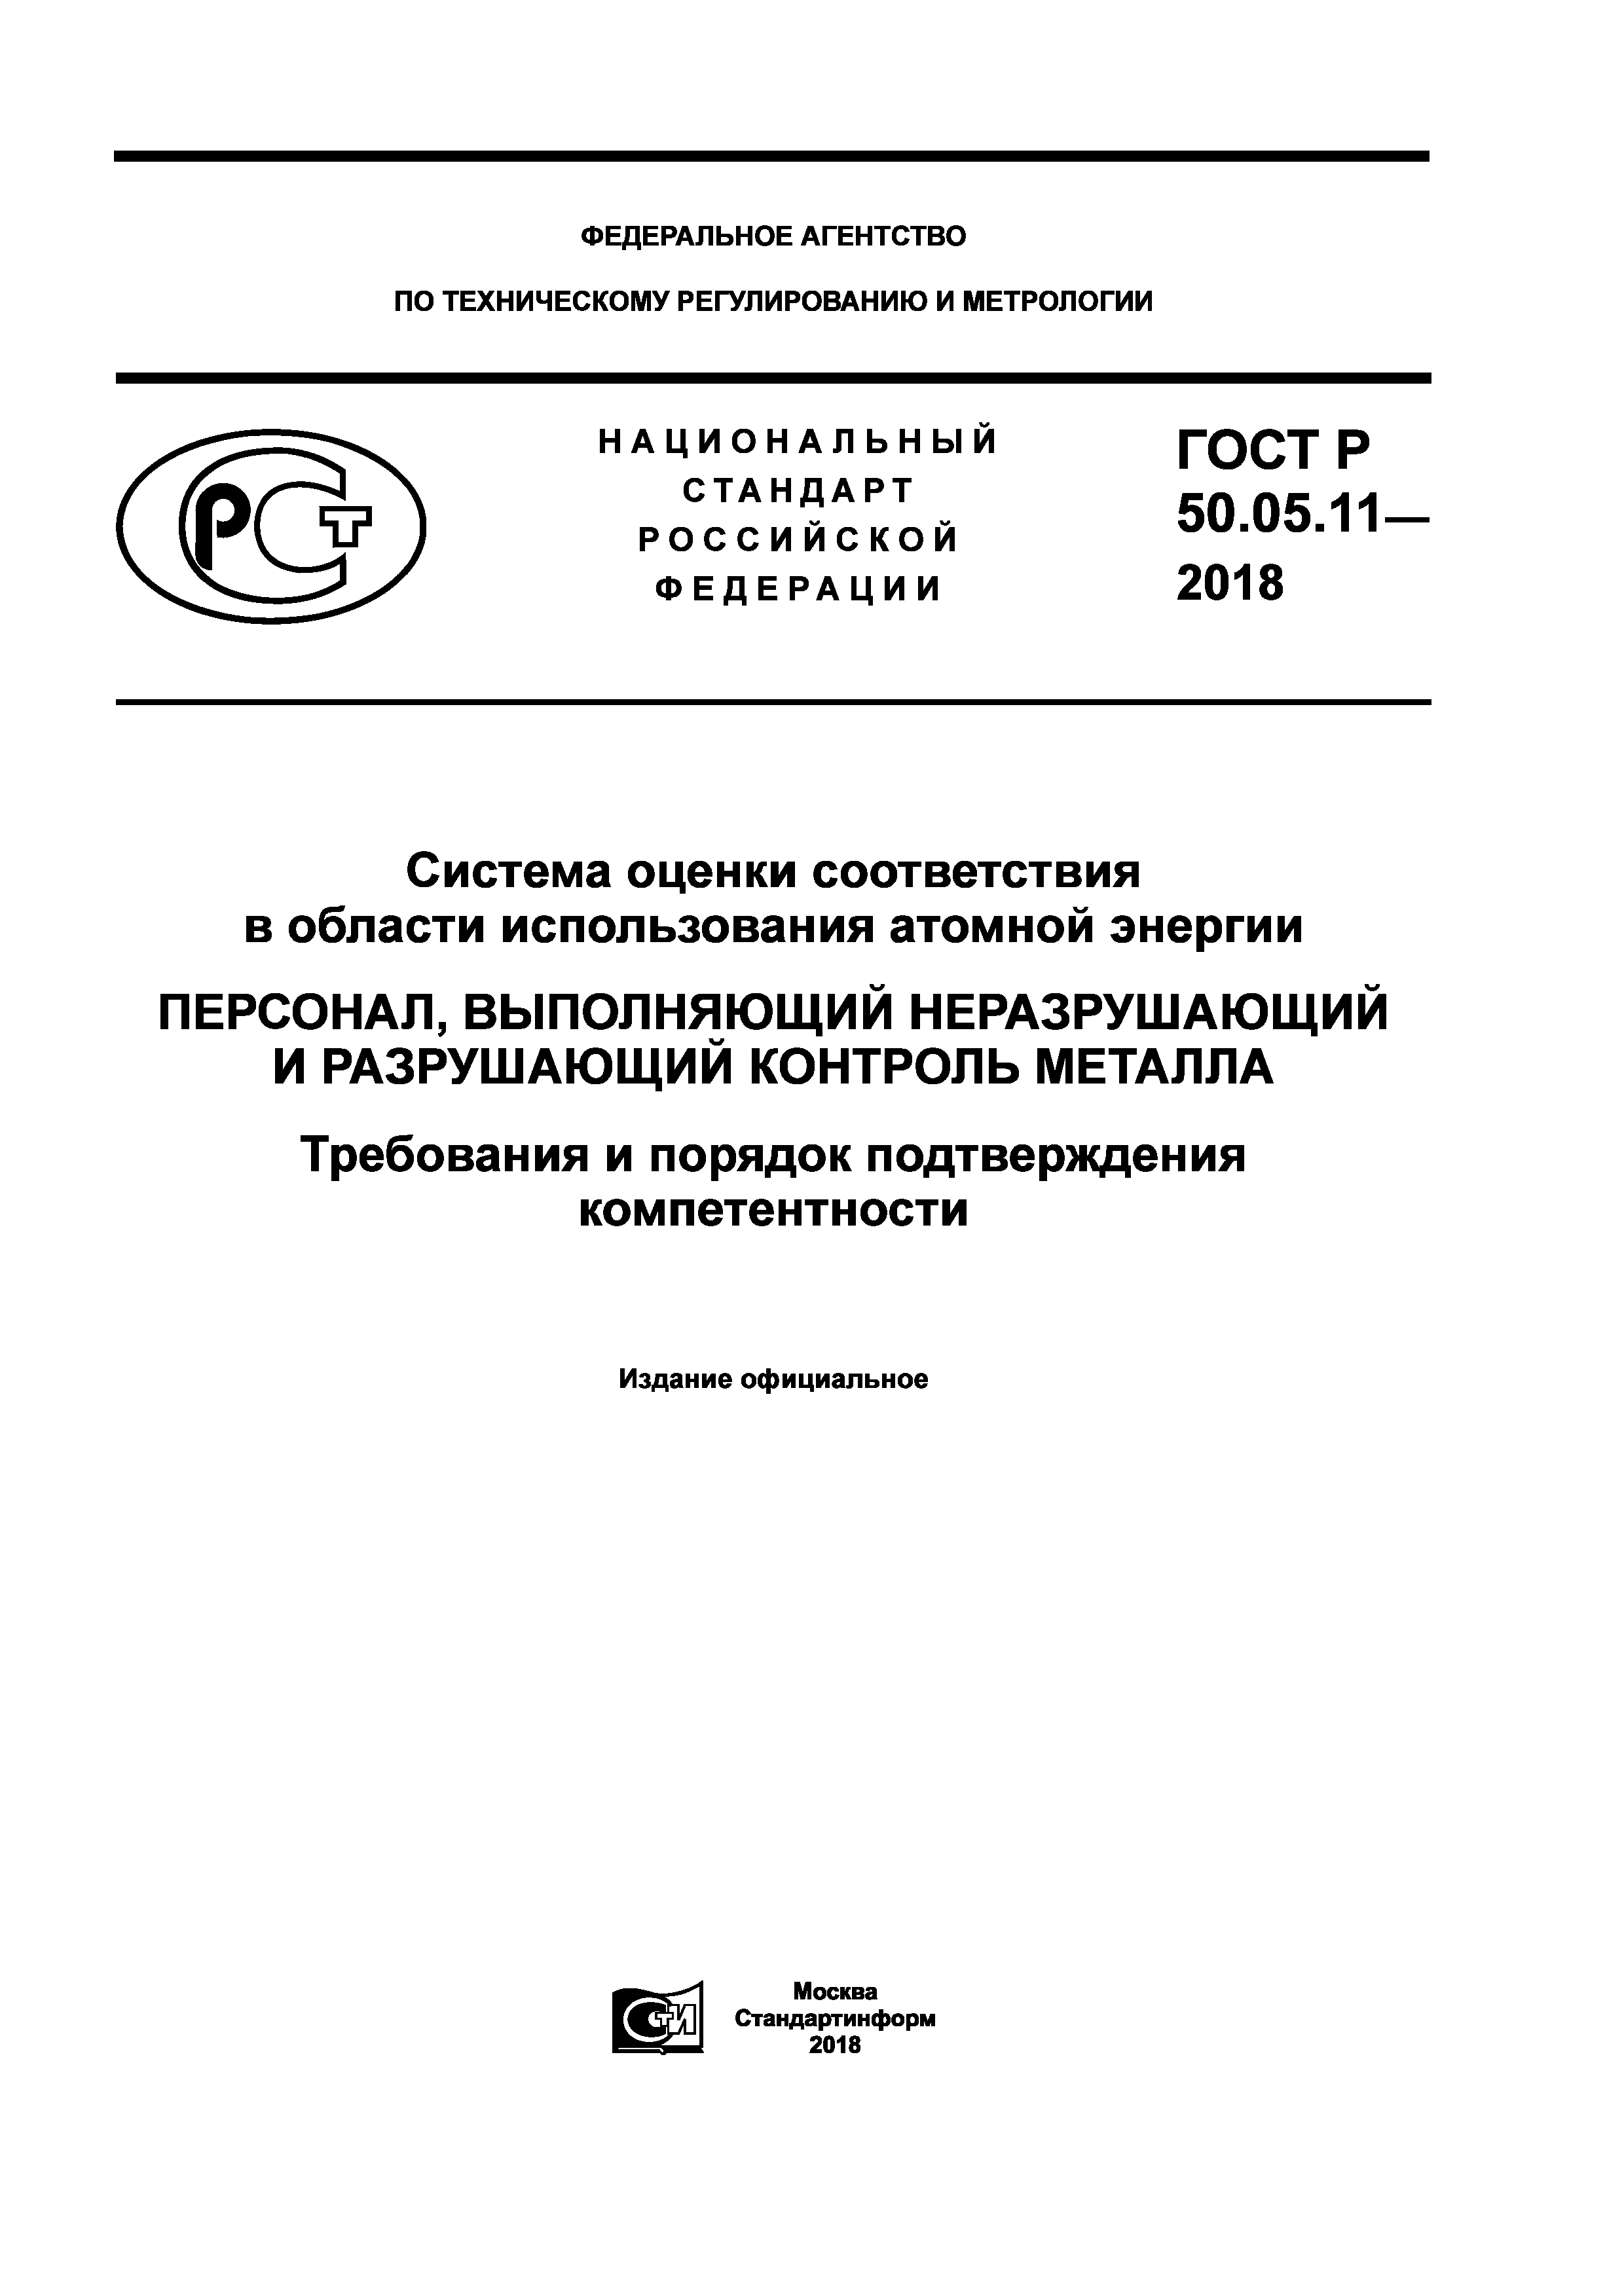 ГОСТ Р 50.05.11-2018